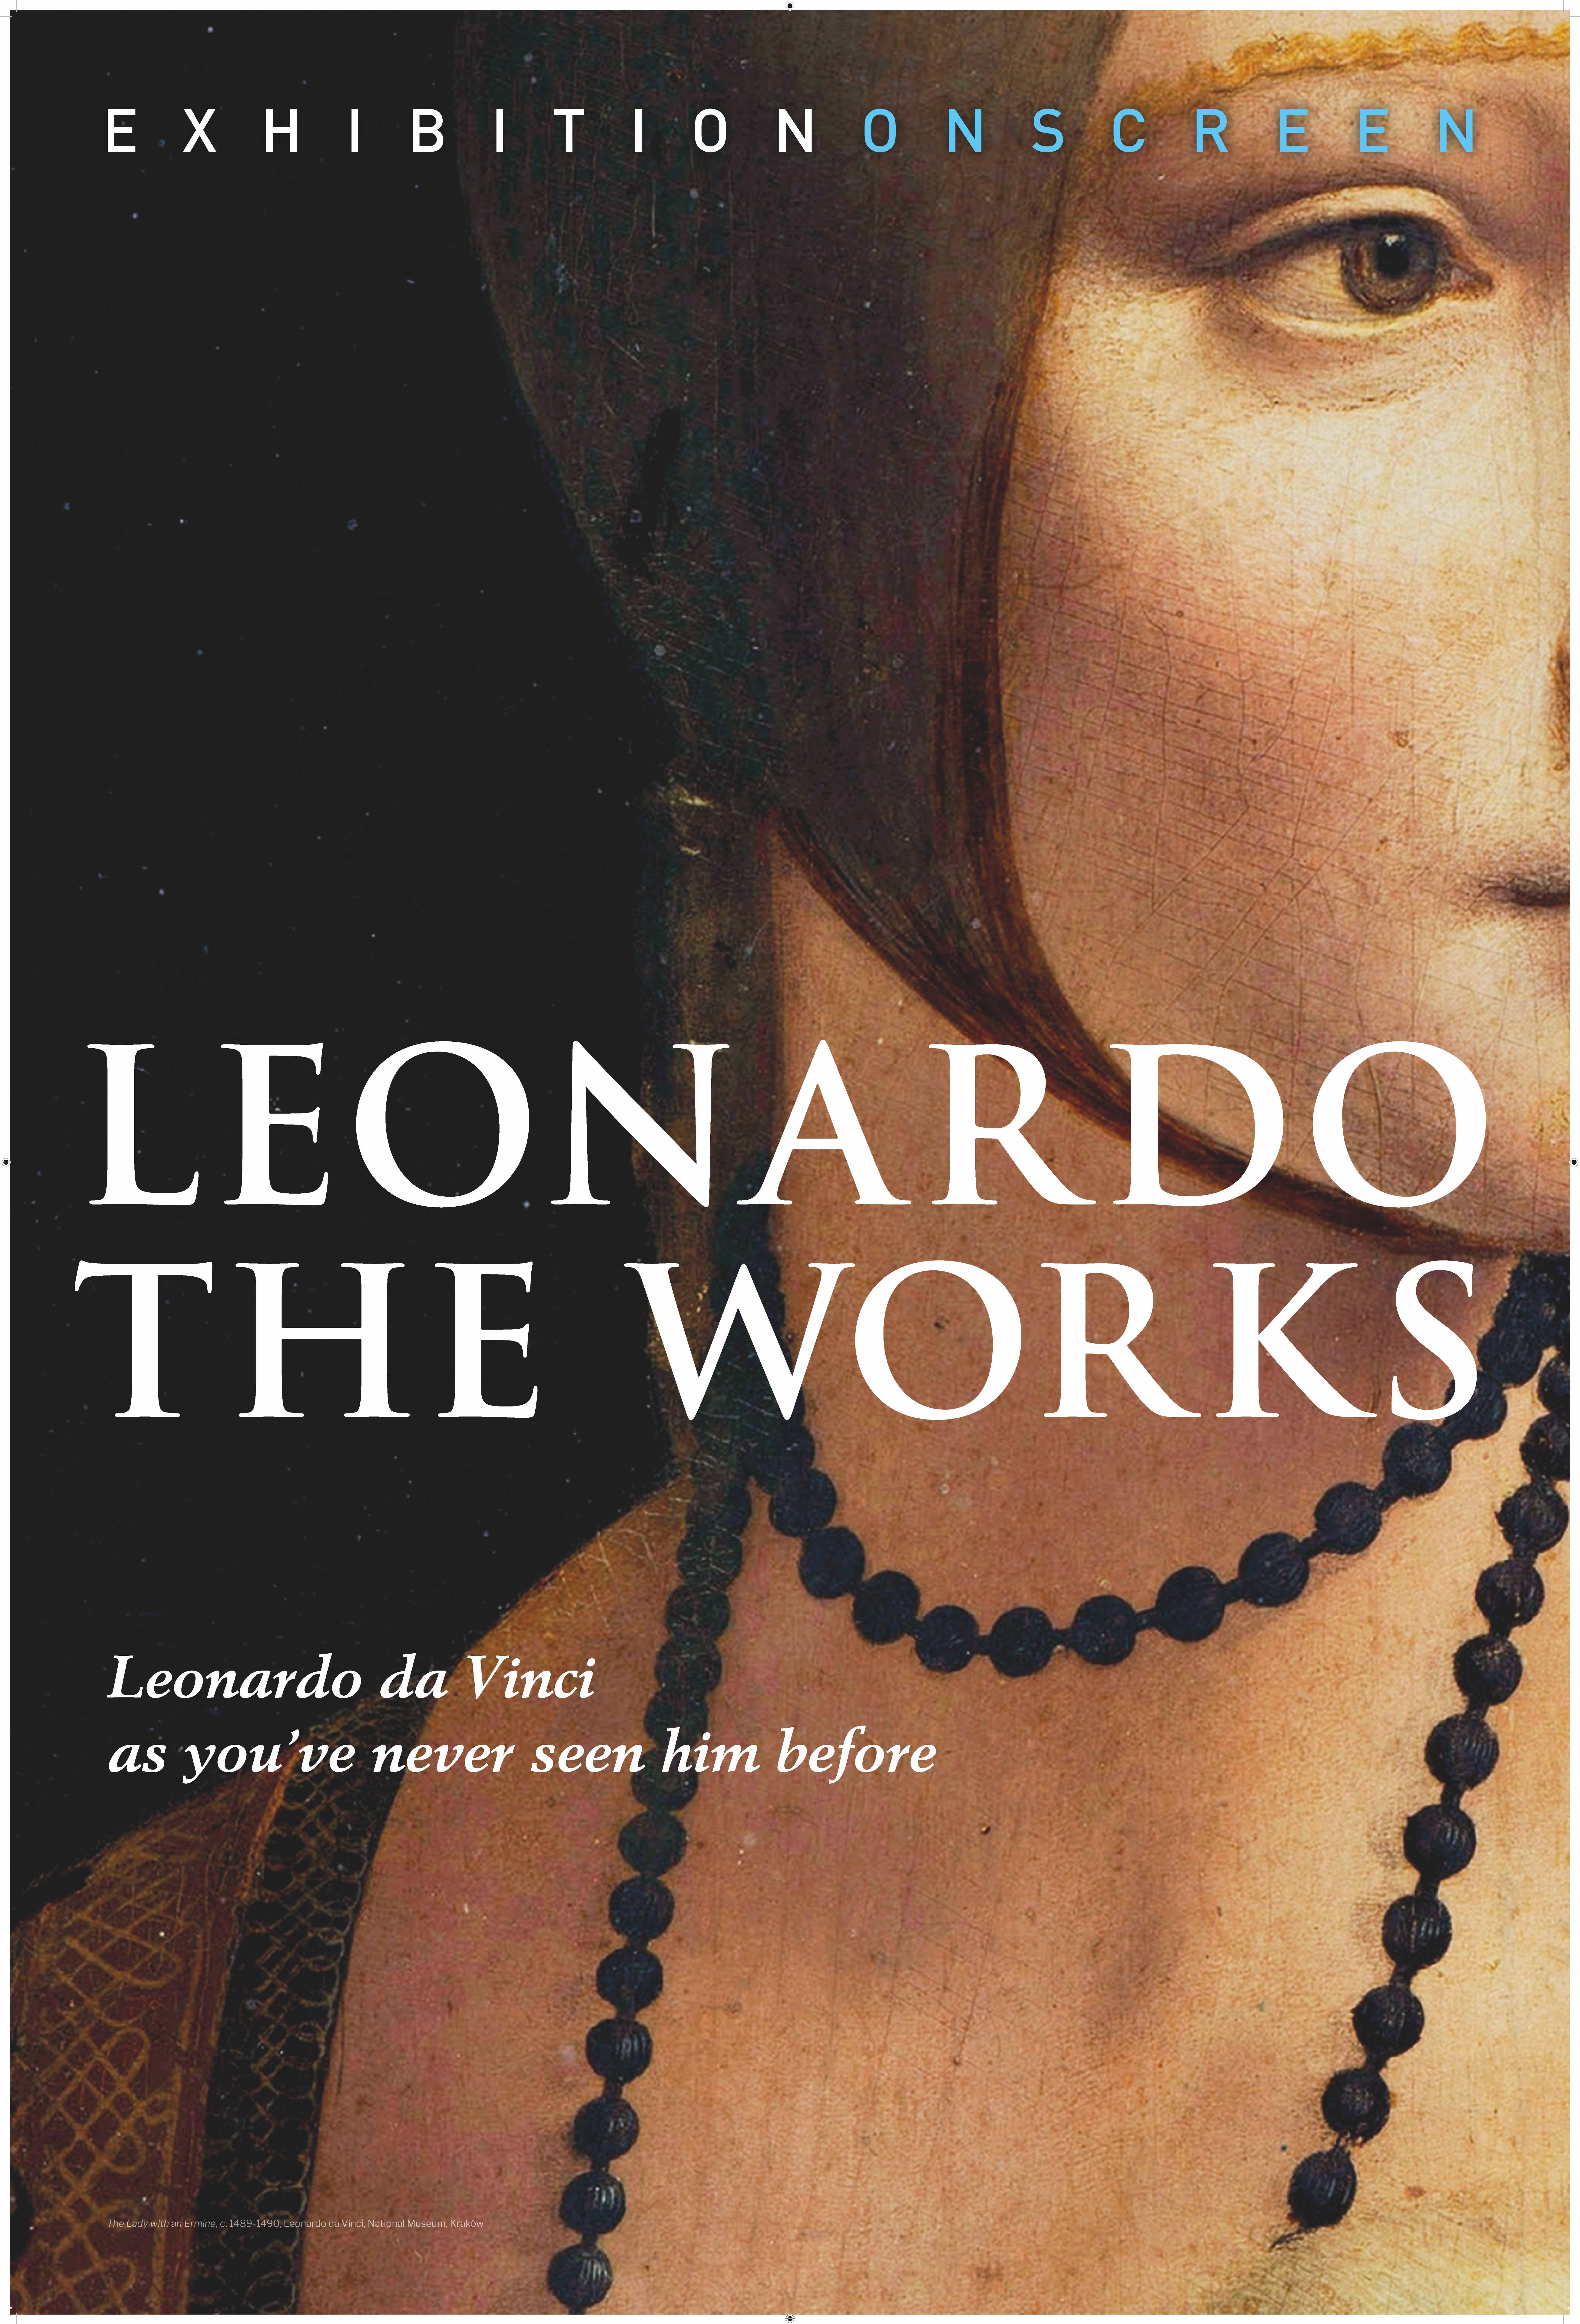 Leonardo: The Works